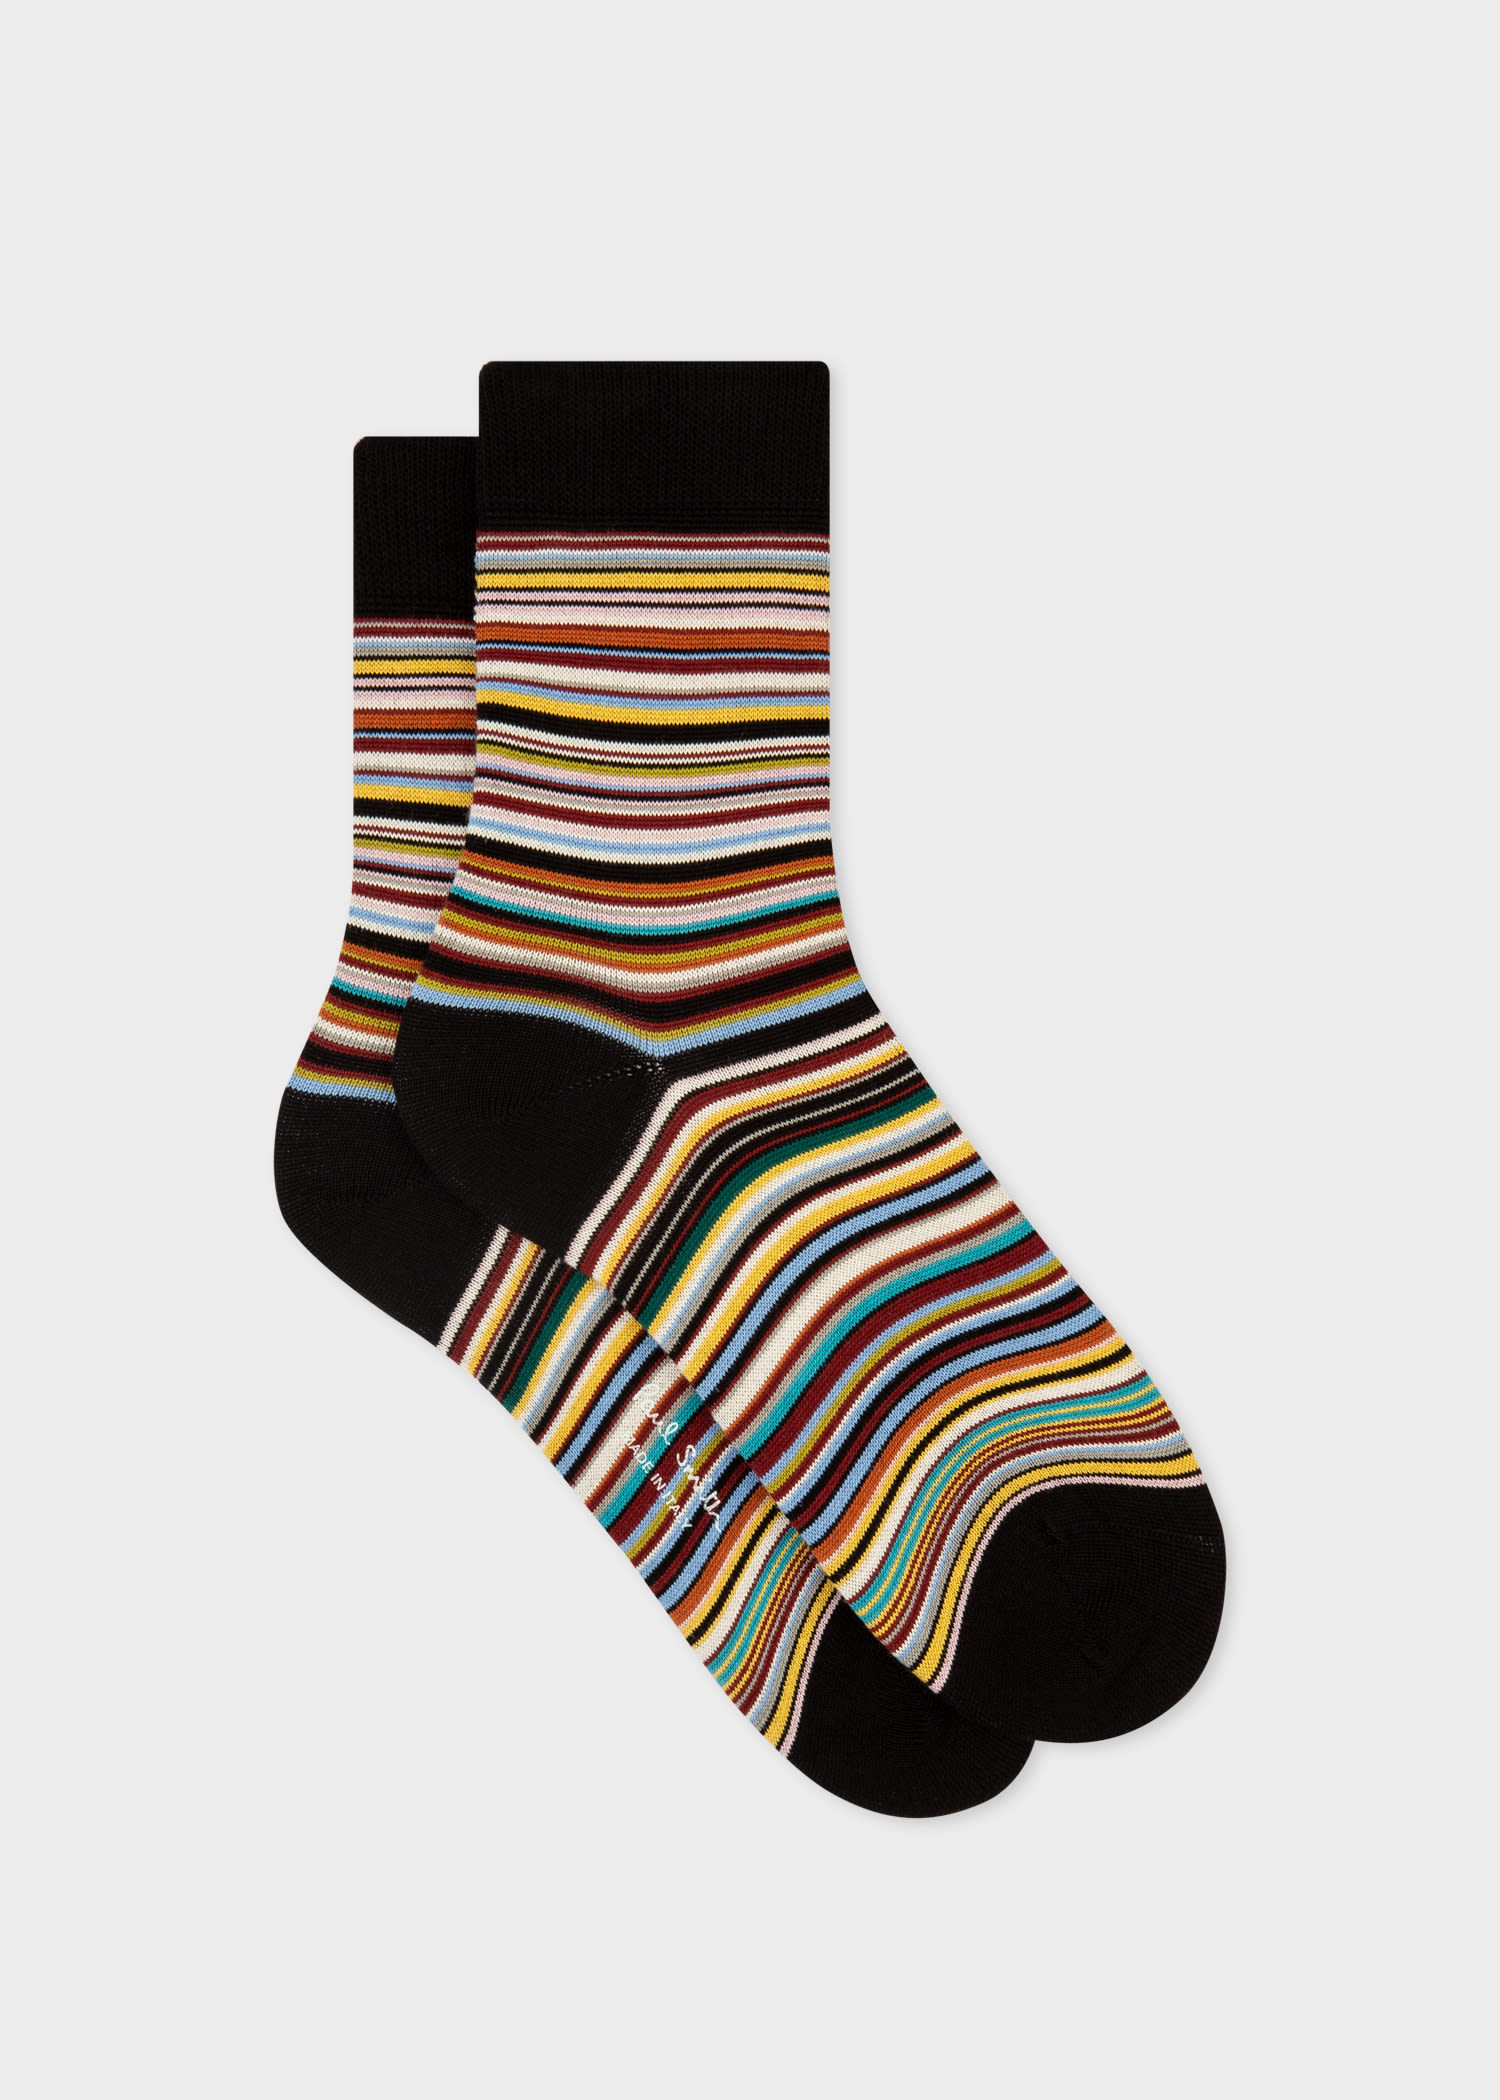 Paul Smith Women's 'signature Stripe' Socks Multicolour